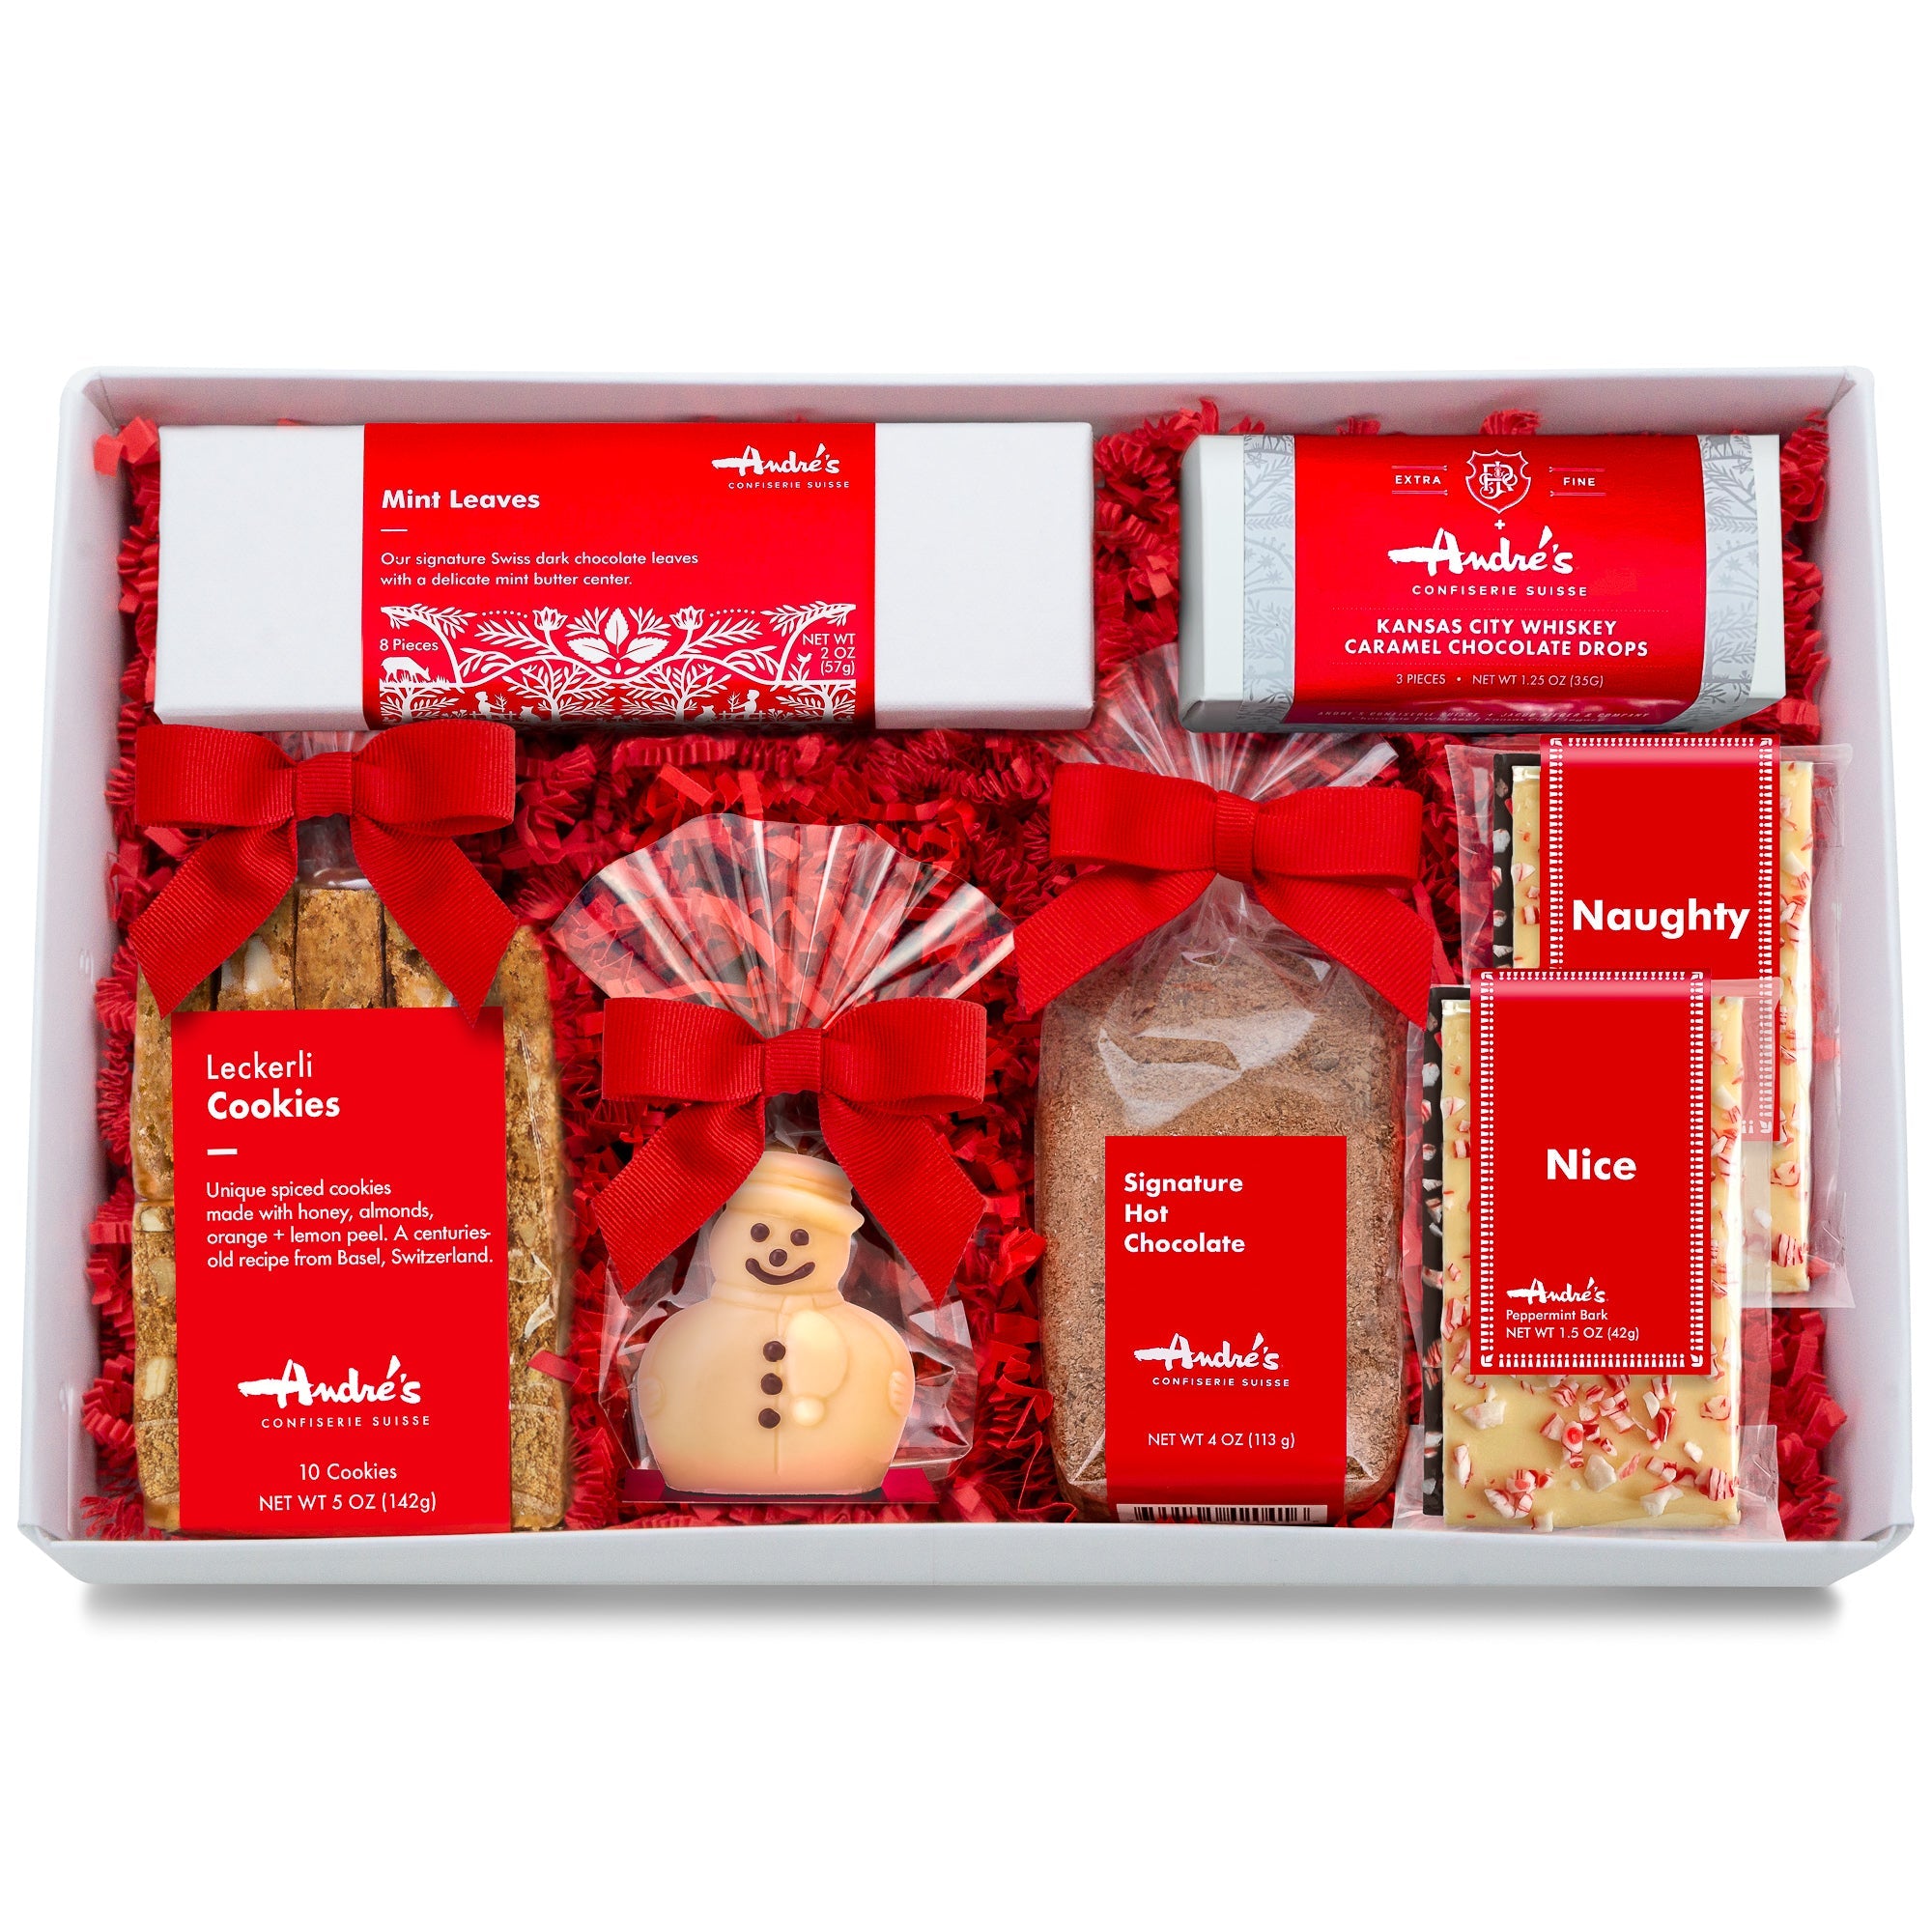 Toblerone Dark, Milk, White Swiss Chocolate Gift Box Tin / LOOSE  Toblerone🍬🍬 | eBay